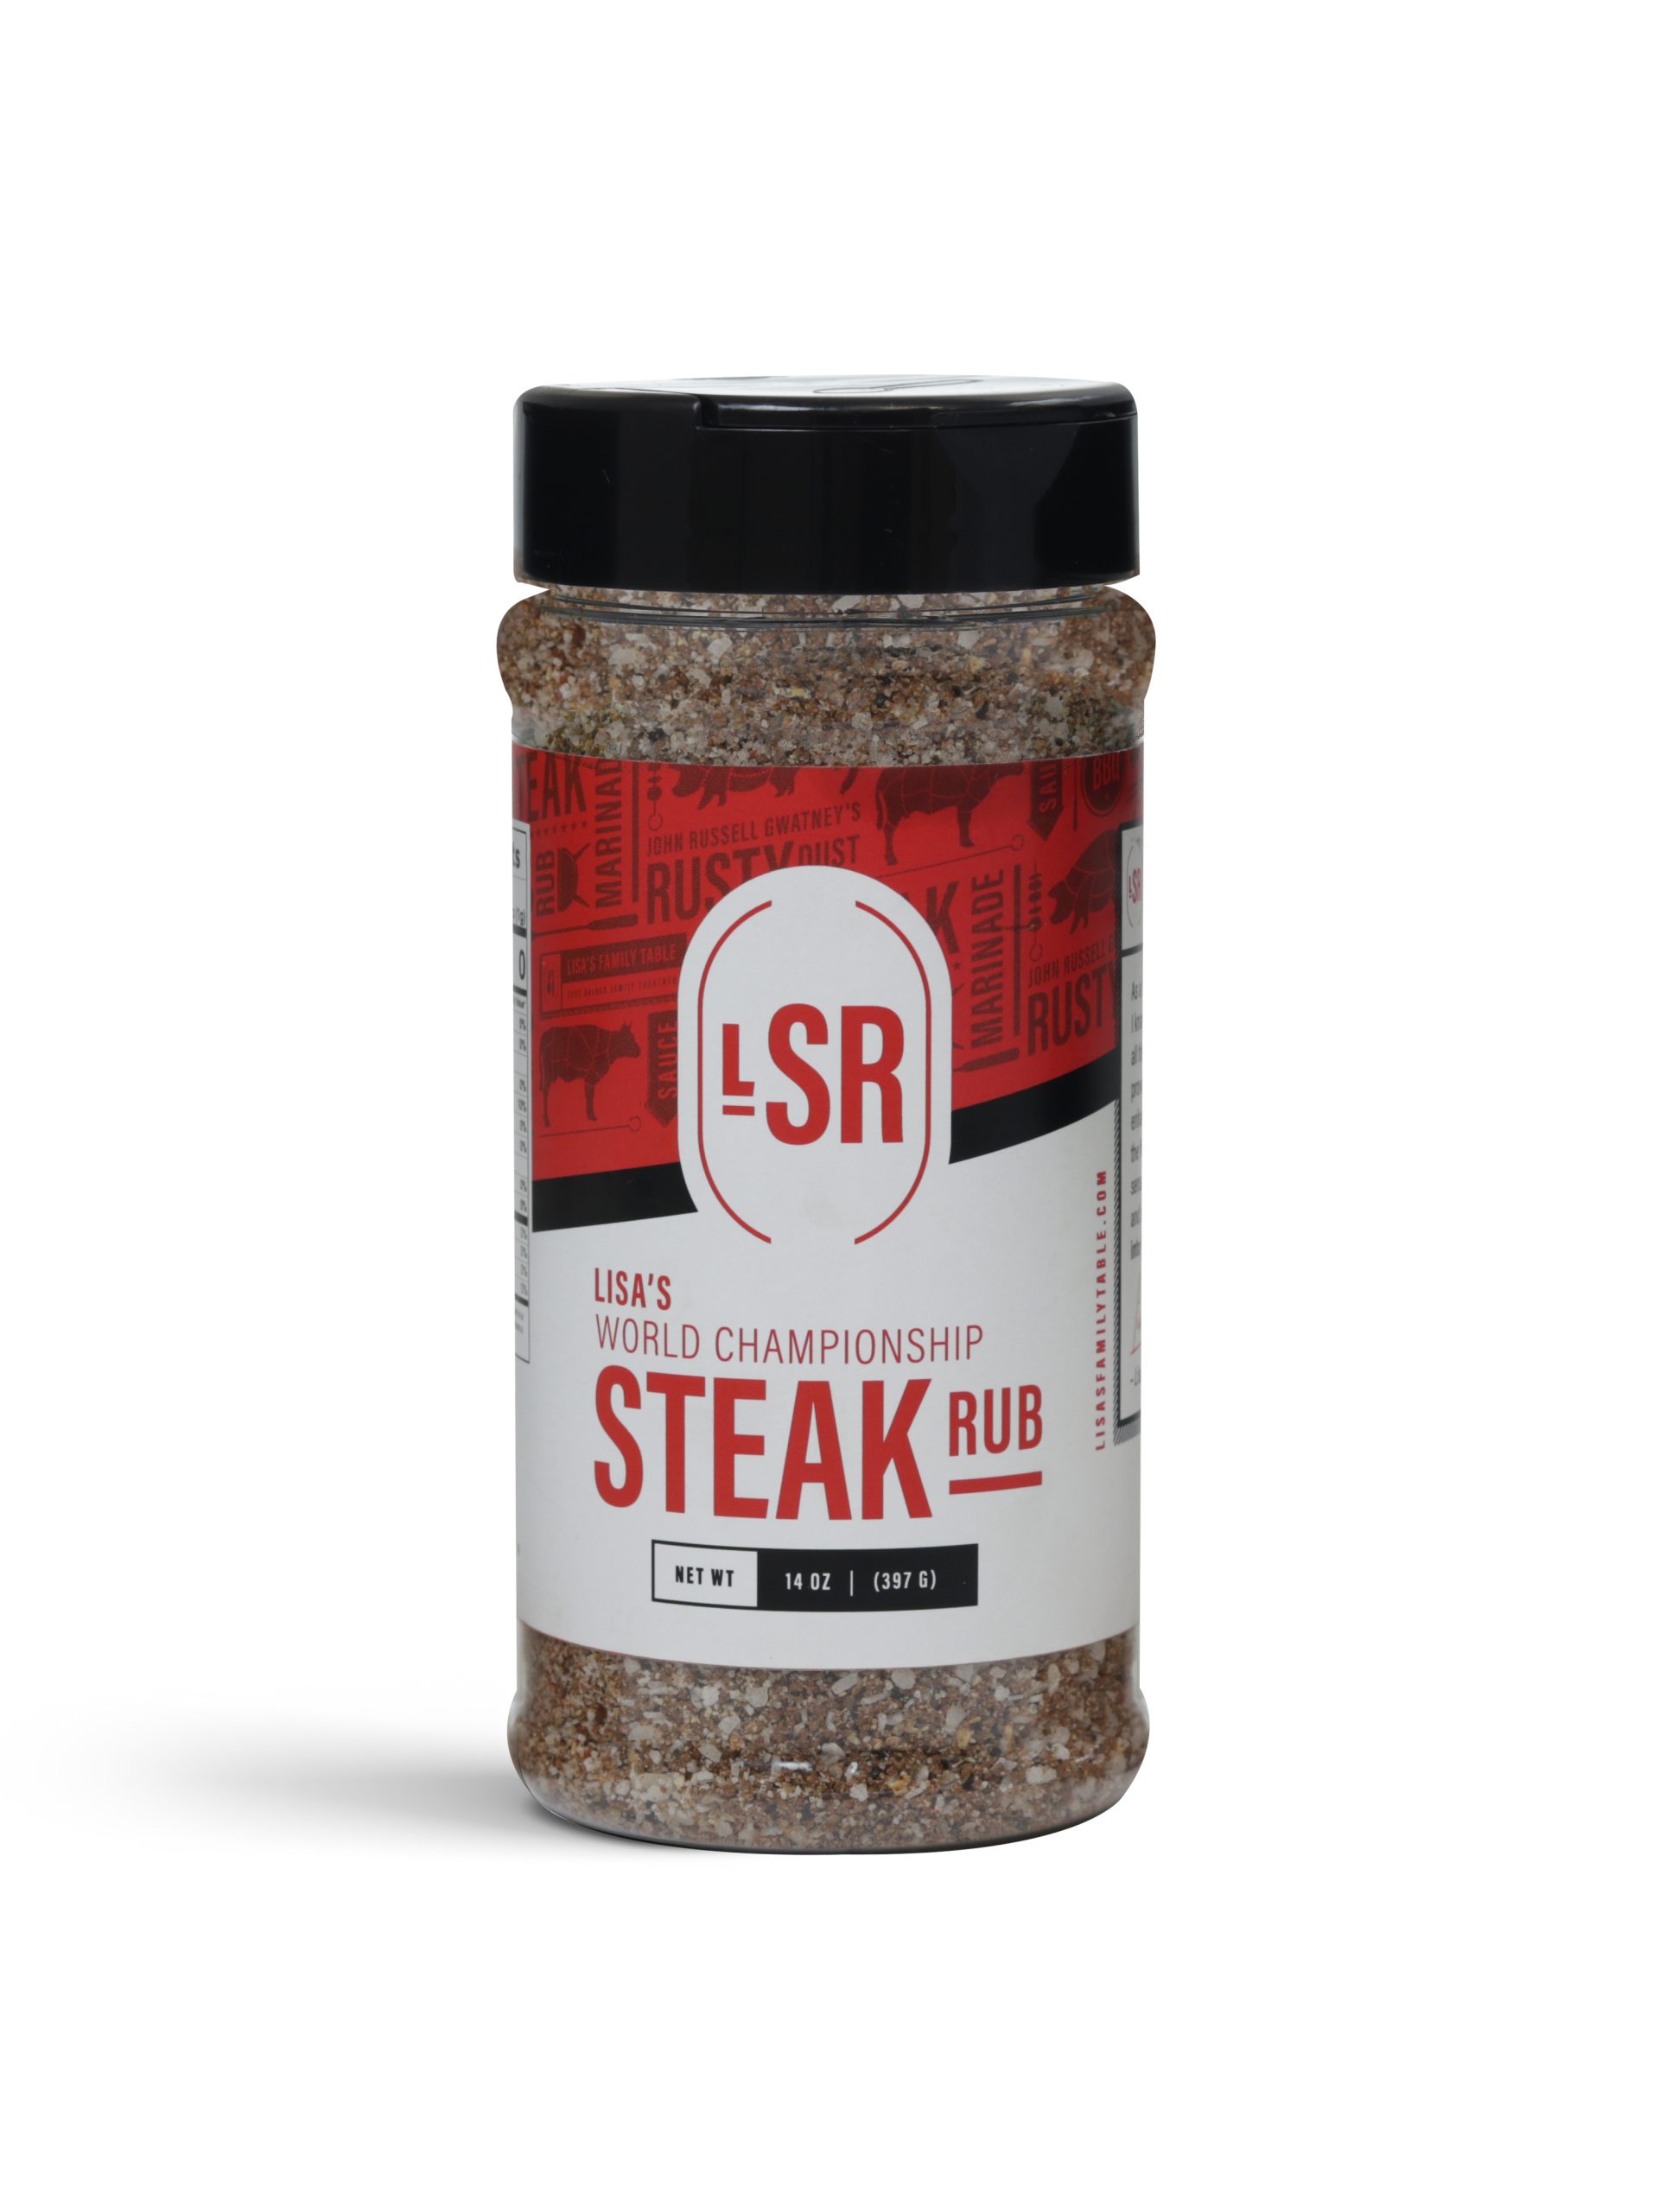 https://stockyardbbqsupply.com/wp-content/uploads/2020/11/LSR_Steak-Rub-scaled.jpg